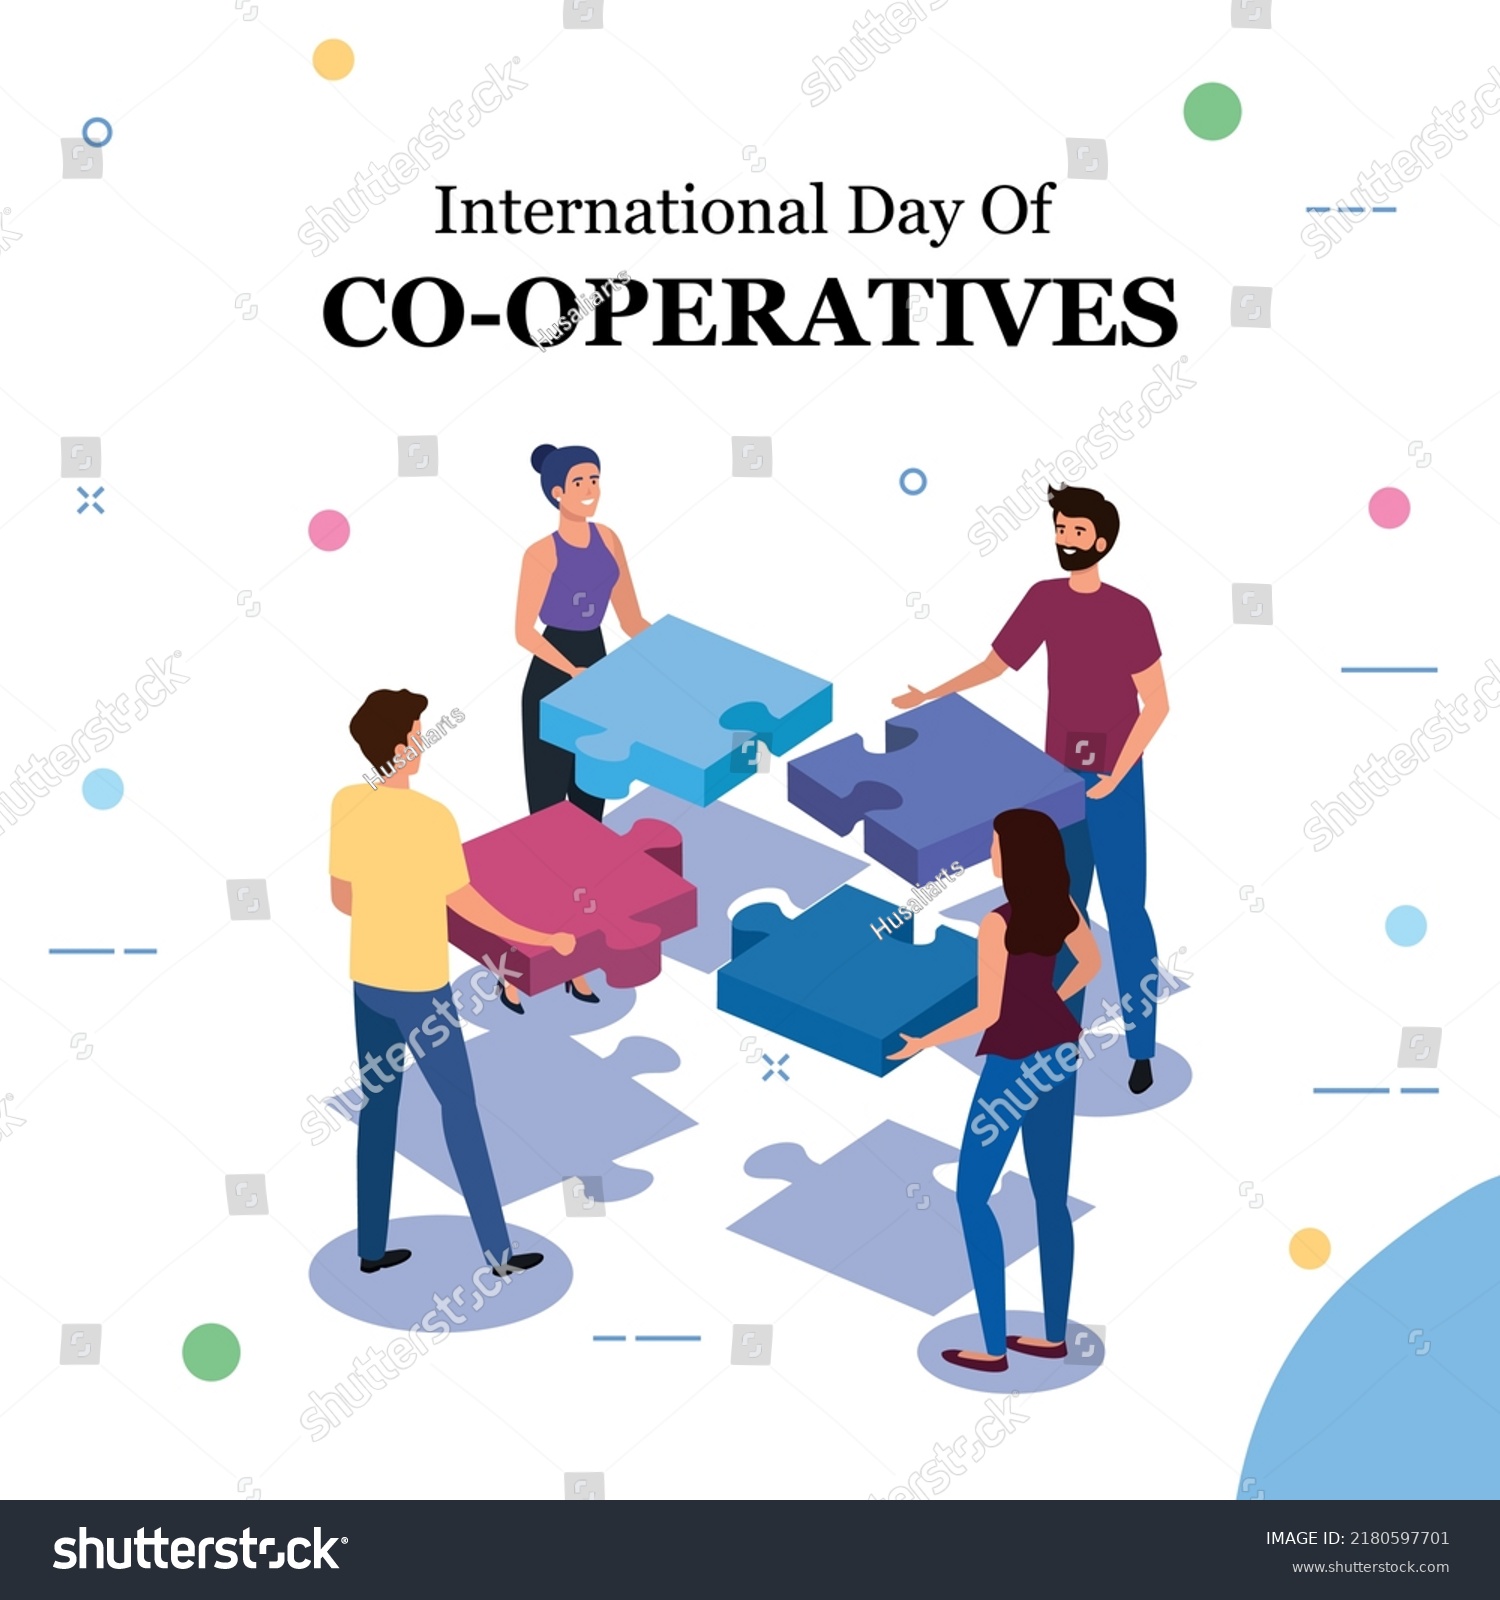 International Day Cooperatives Vector Illustration Stock Vector Royalty Free 2180597701 0660